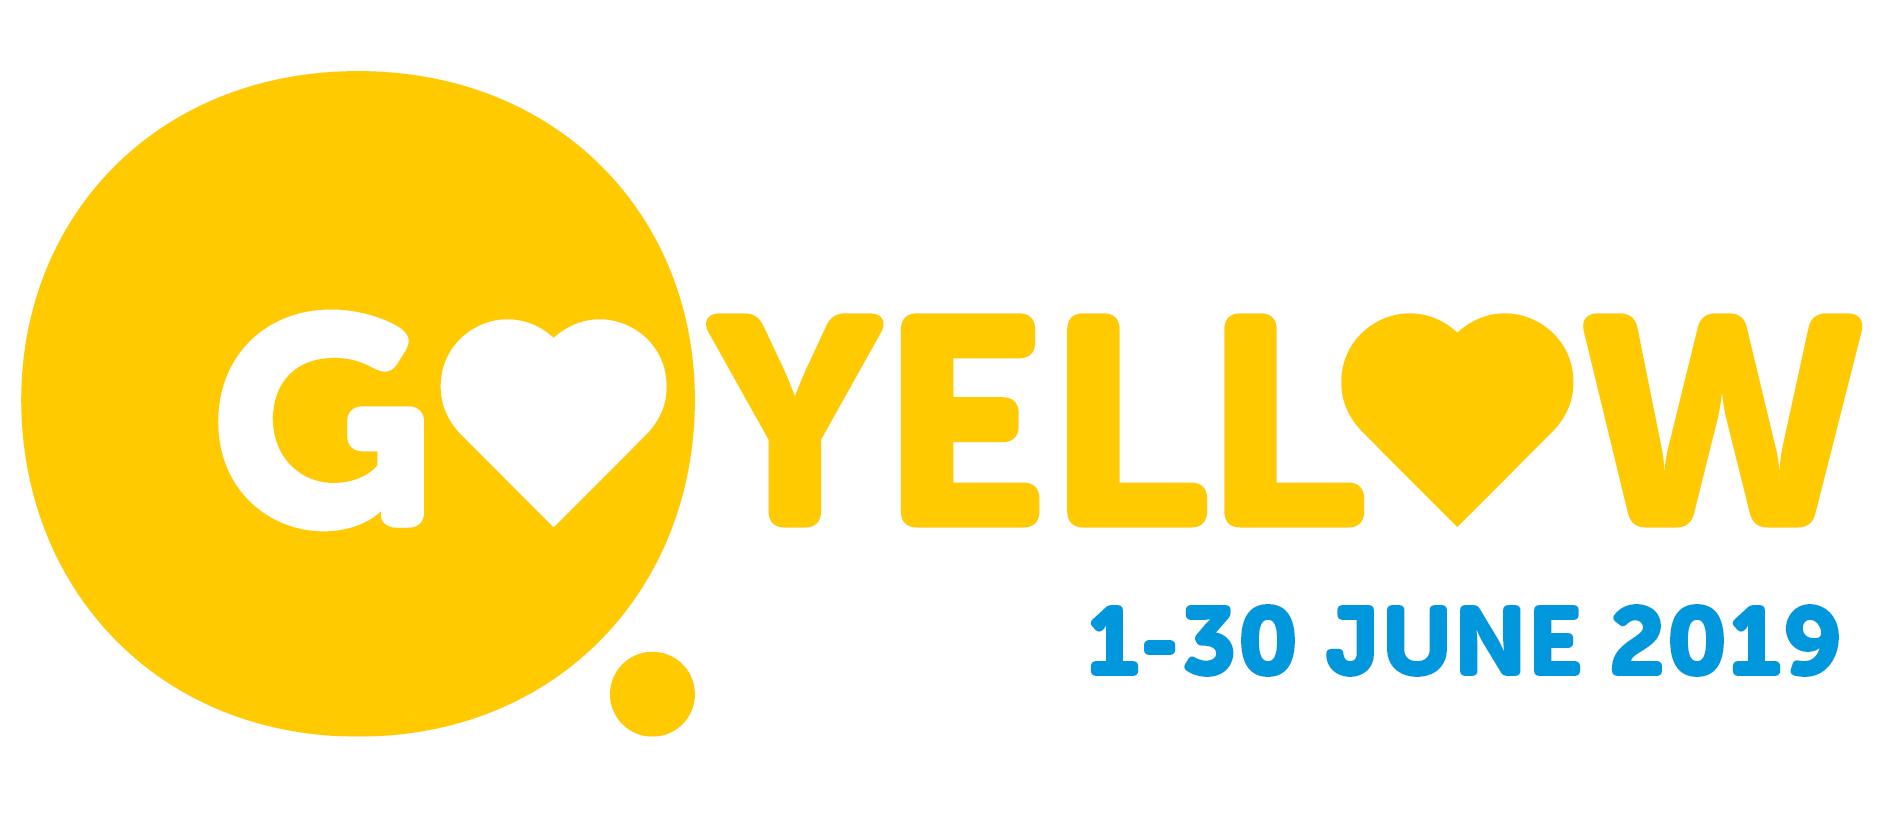 Orange and Yellow Logo - go yellow logo 2019. St Barnabas Hospice